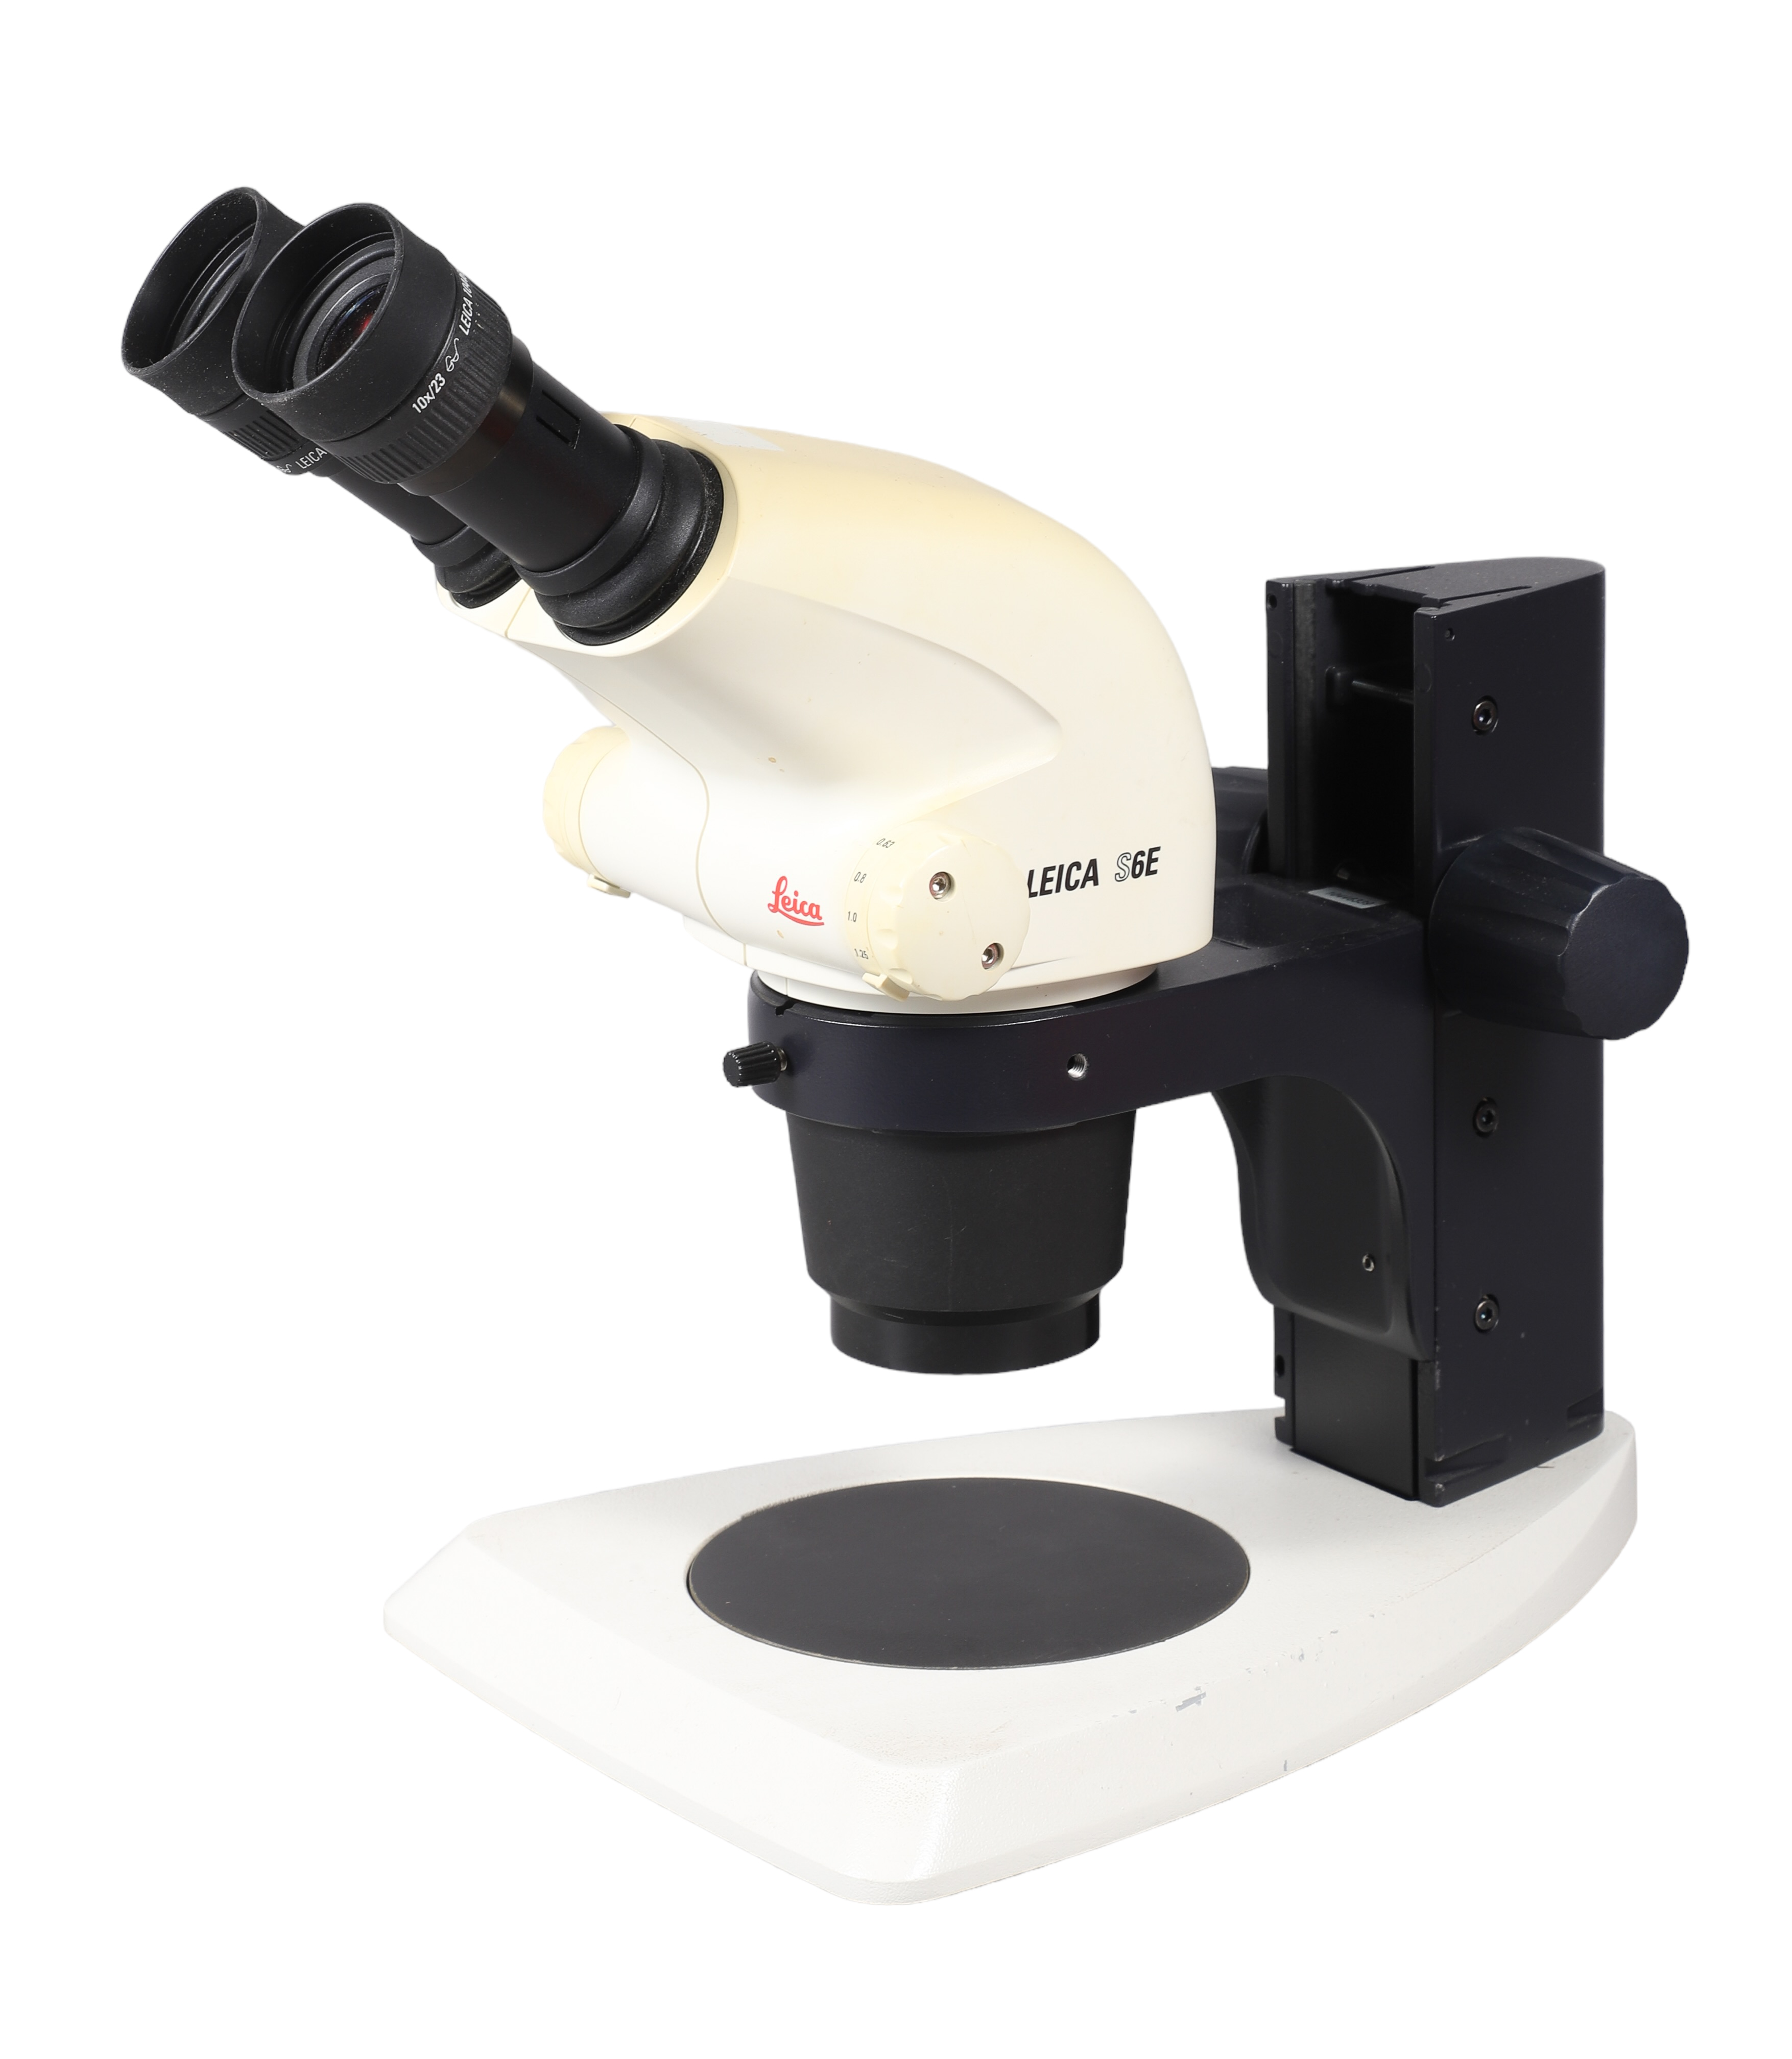 Leica Stereo Microscope S6E serial 317fd1